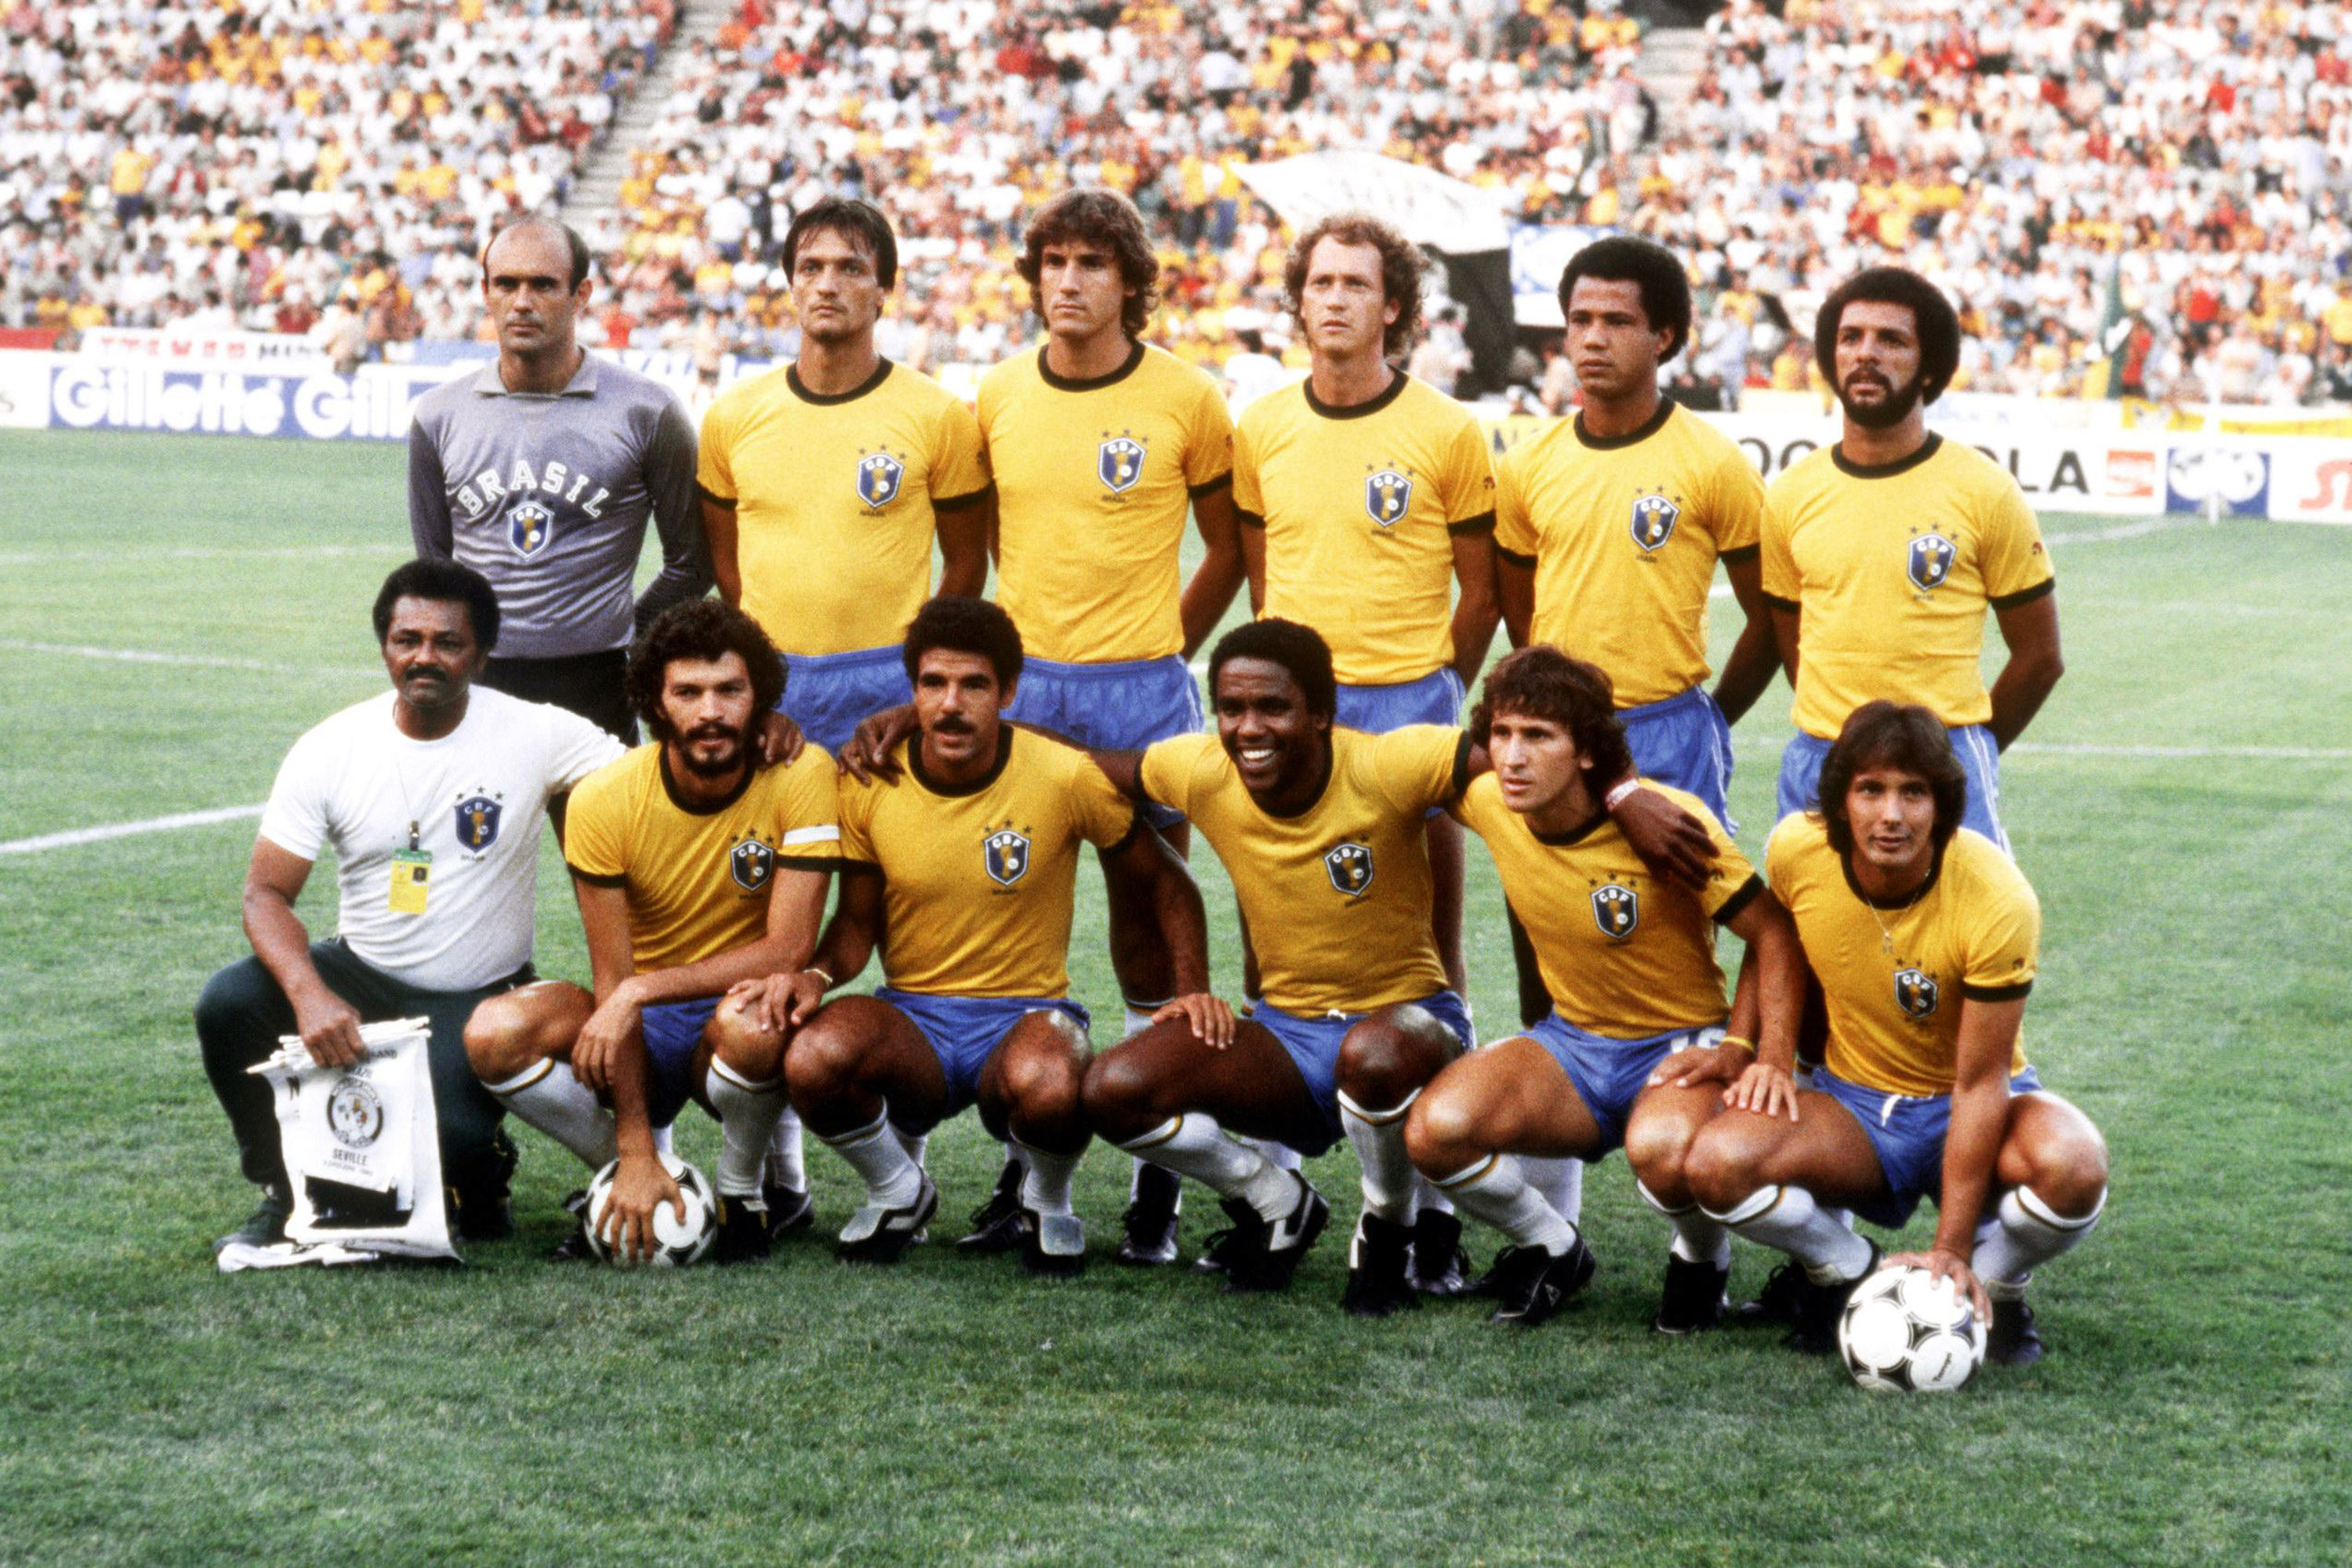 Brazil team group. Back, left to right: Waldir Perez, Leandro, Oscar, Falcao, Luizinho, Junior. Front, left to right: Trainer, Socrates, Cerezo, Serginho, Zico, Eder.